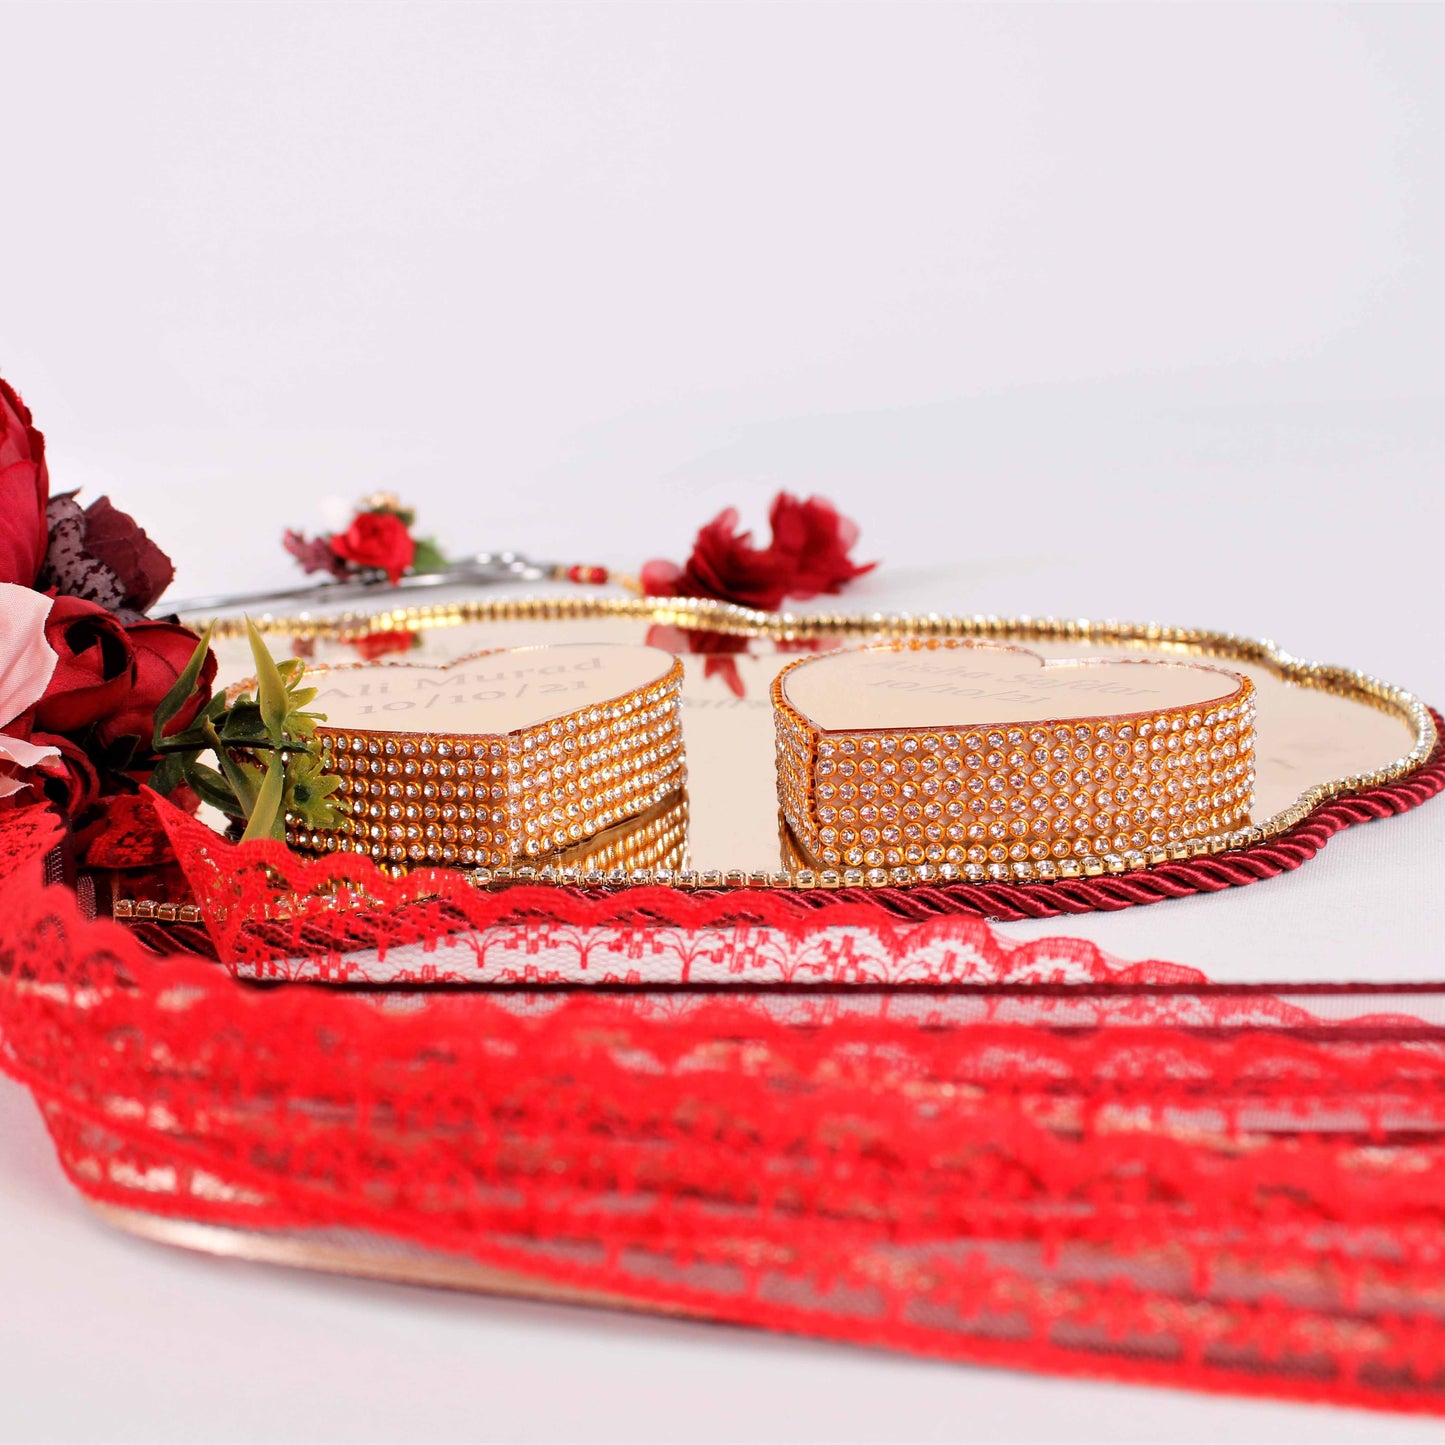 Personalized Wedding Ring Plate Heart Shape Ring Box Scissor Gift Set